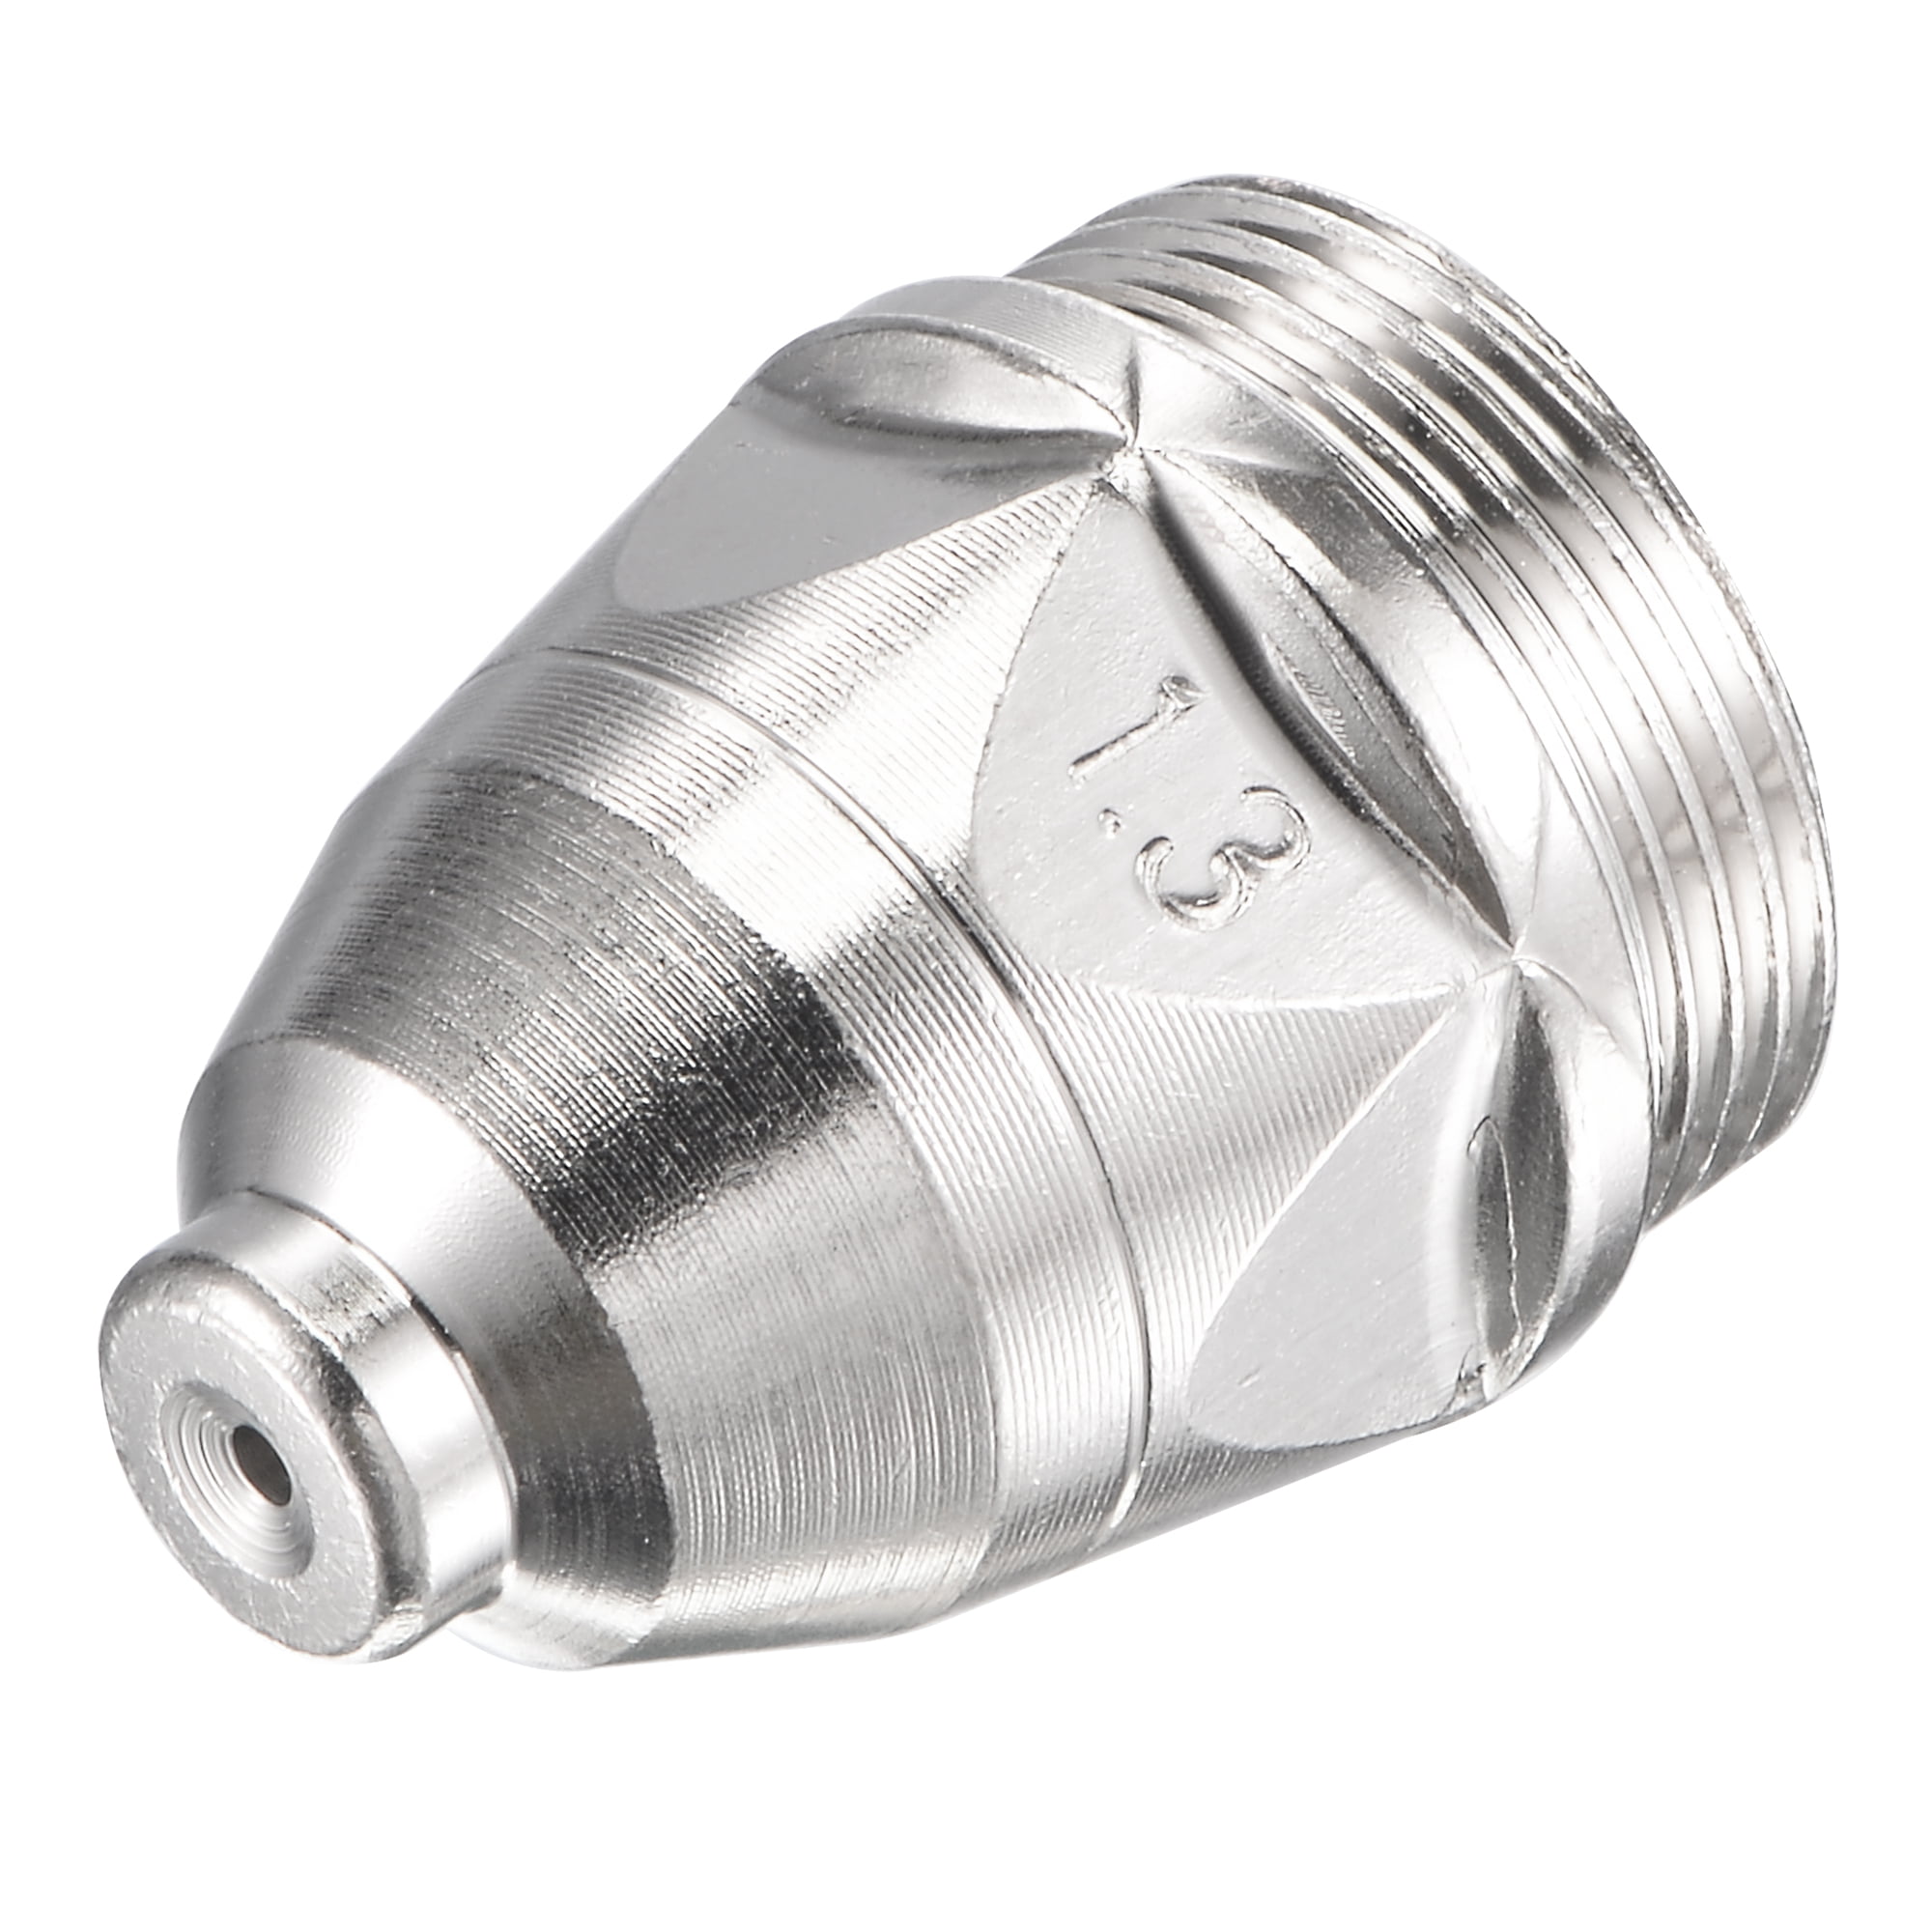 85 pcs PT31 LG40 Plasma Cutter Torch Electrode Tip Nozzle Consumable Accessory 